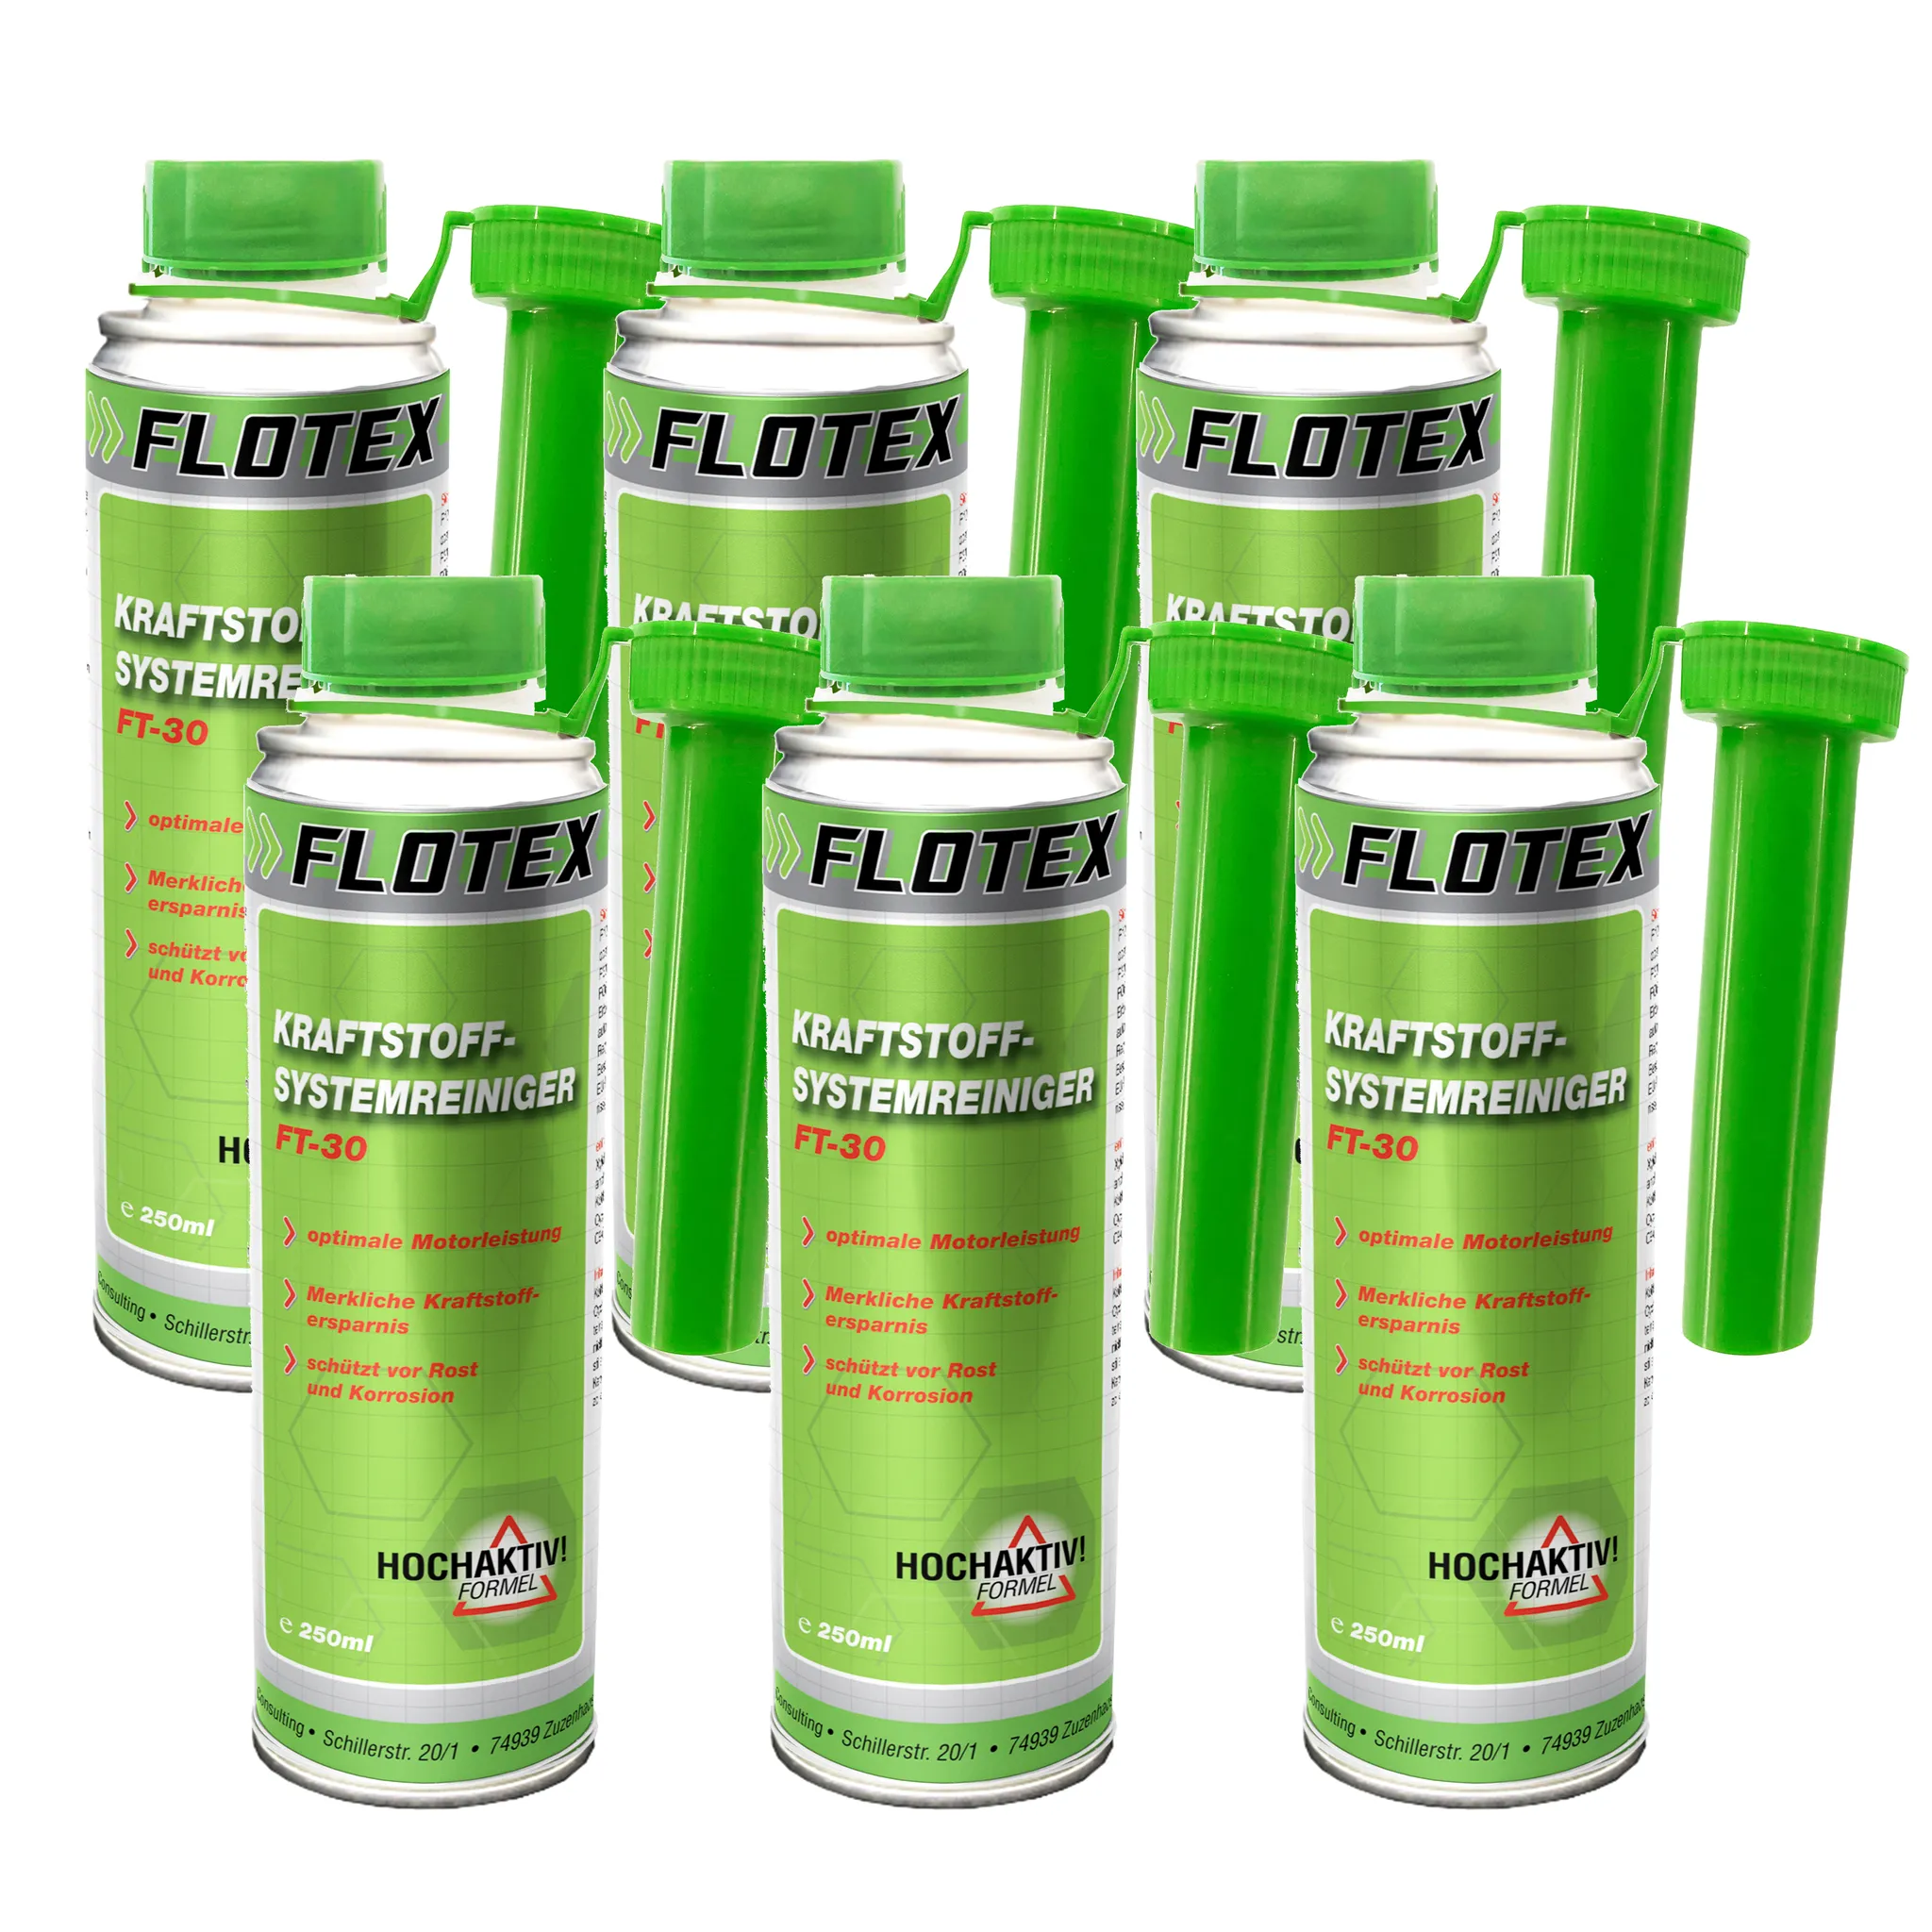 Flotex Kraftstoffsystemreiniger, 6 x 250ml Additiv Reiniger Kraftstoff- System